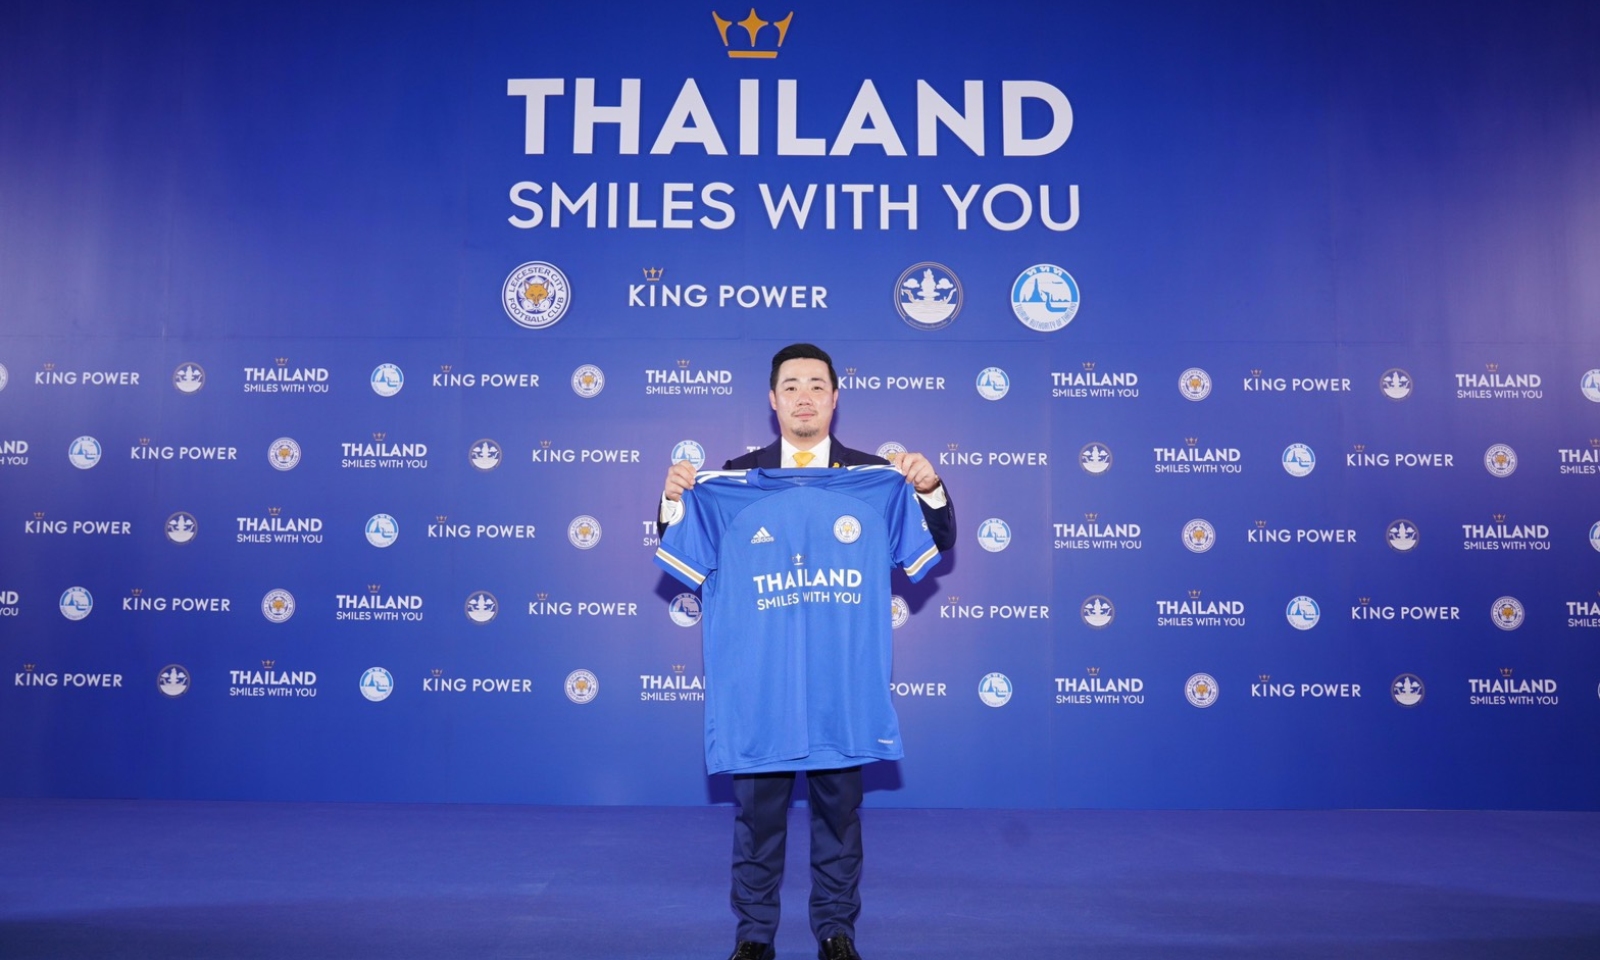 Кинг повер. Thailand smiles with you. Лестер форма Thailand. King Power. Thailand smiles with you logo.